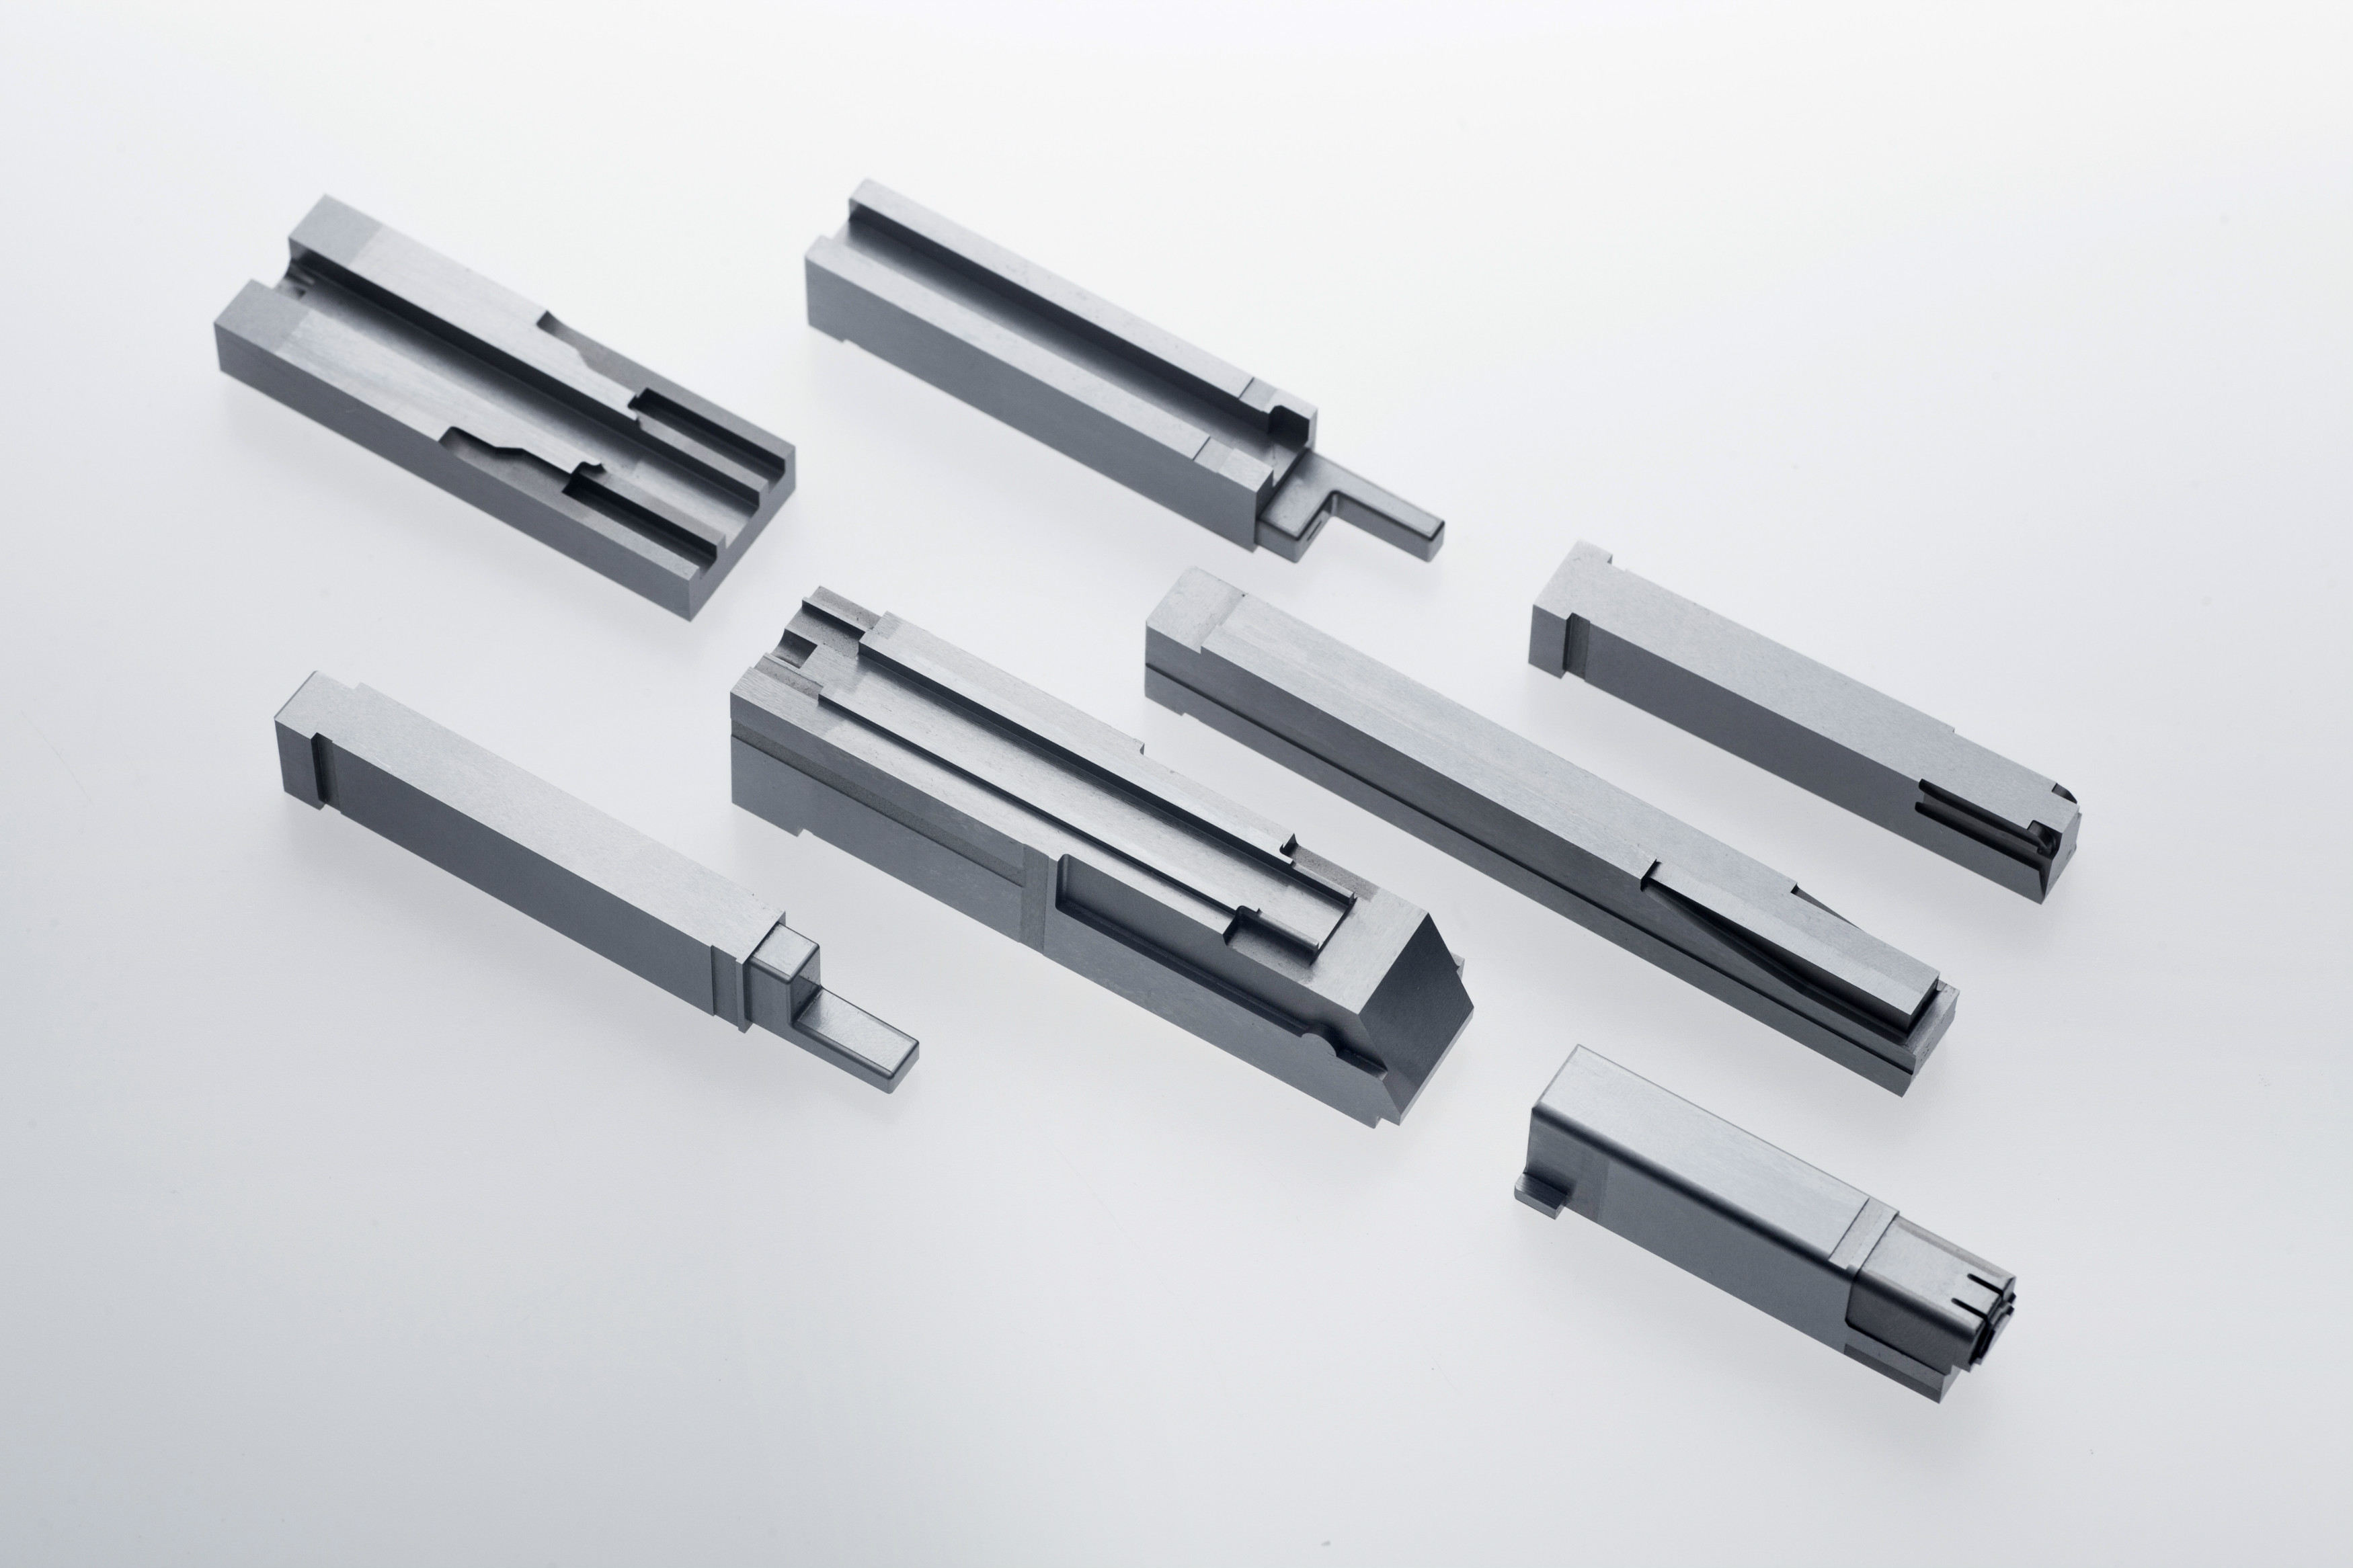 Design Principles of Metal Stamping Parts